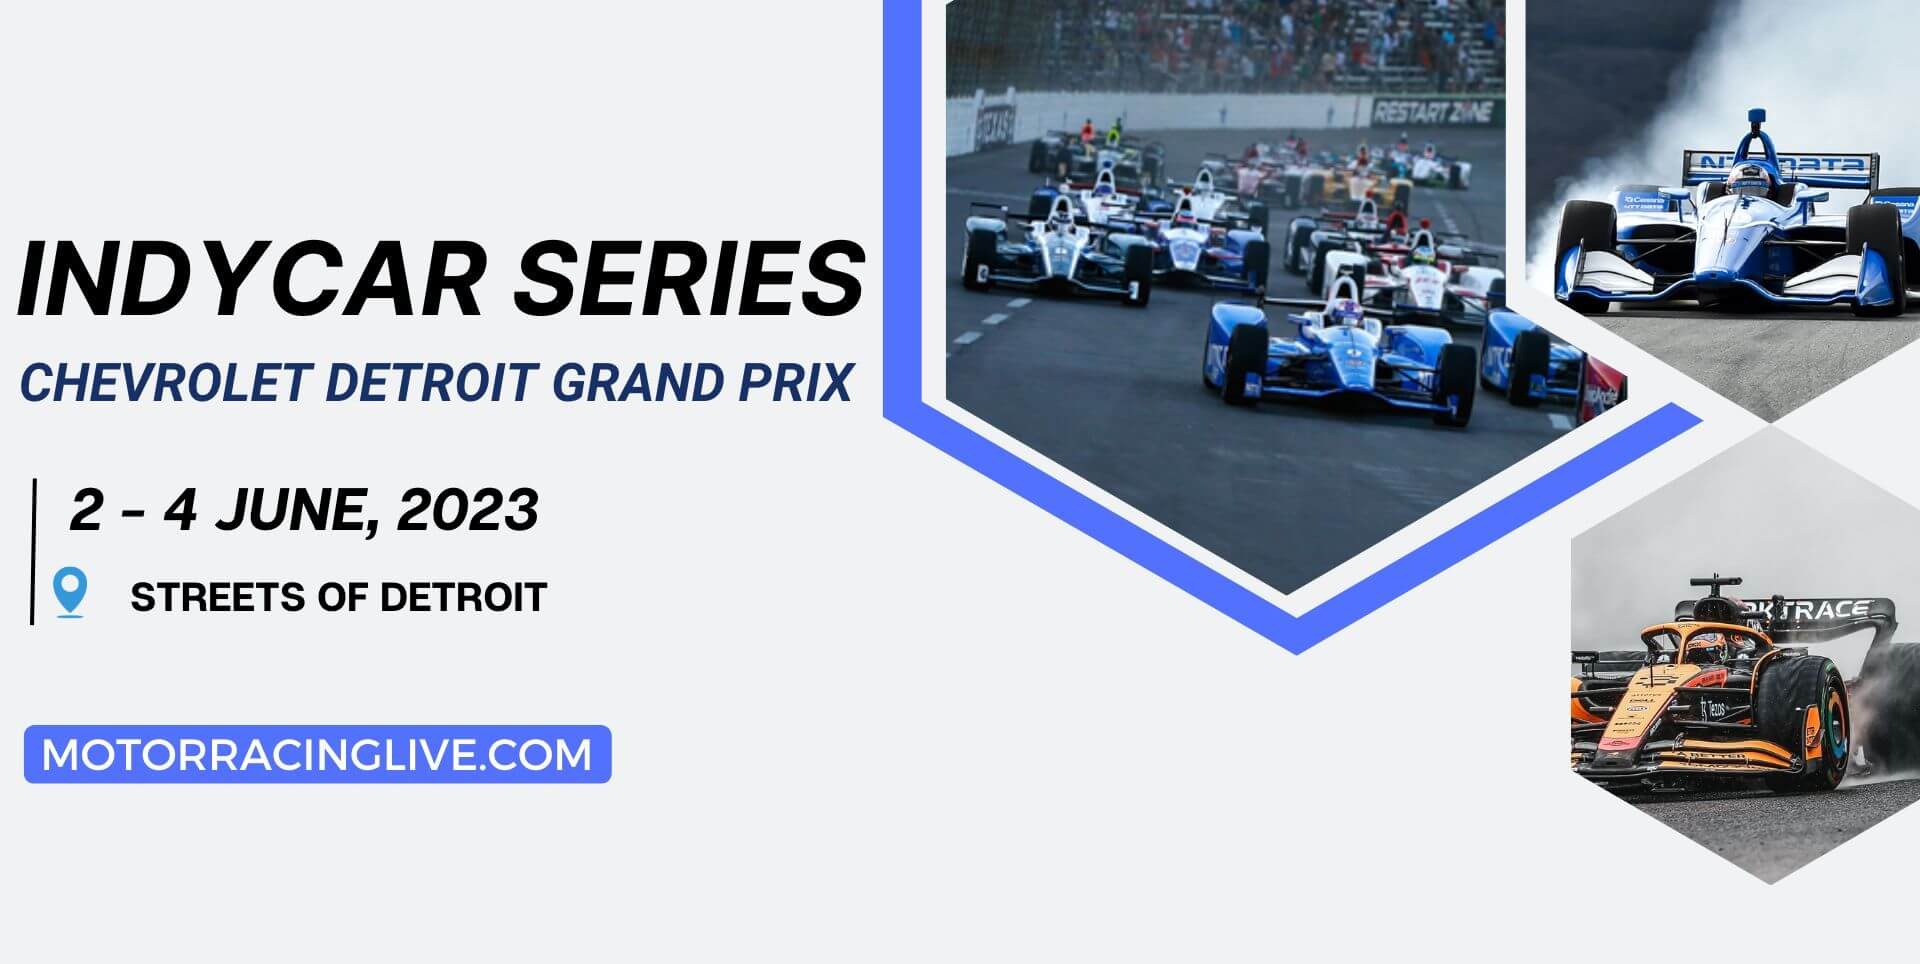 Chevrolet Detroit Grand Prix Live Stream 2023 | Indycar